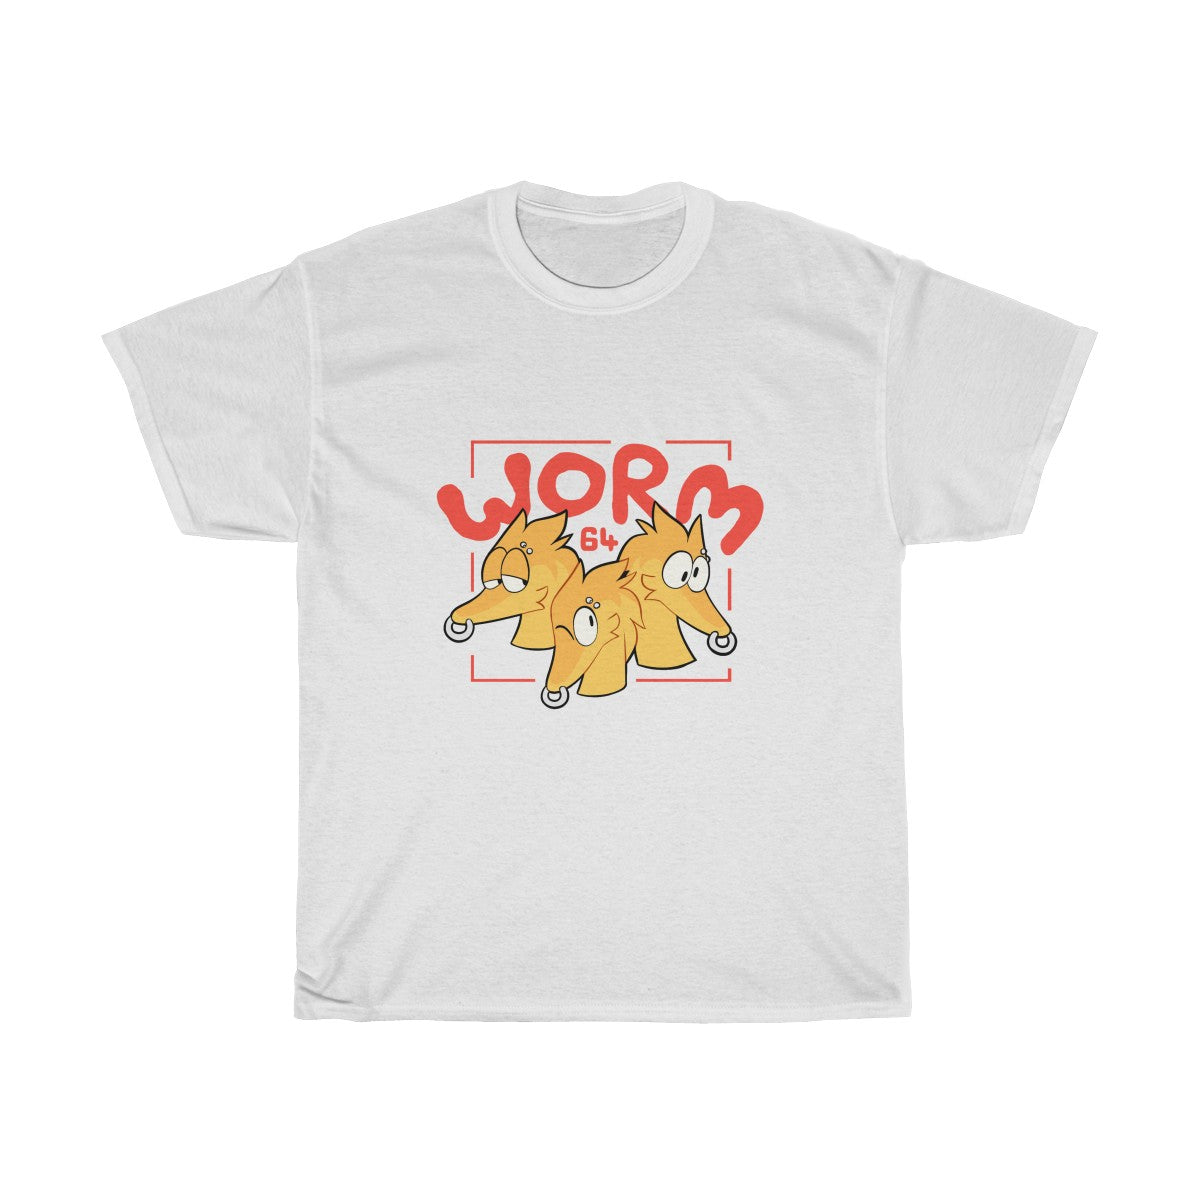 Worm 64 - T-Shirt T-Shirt Motfal White S 